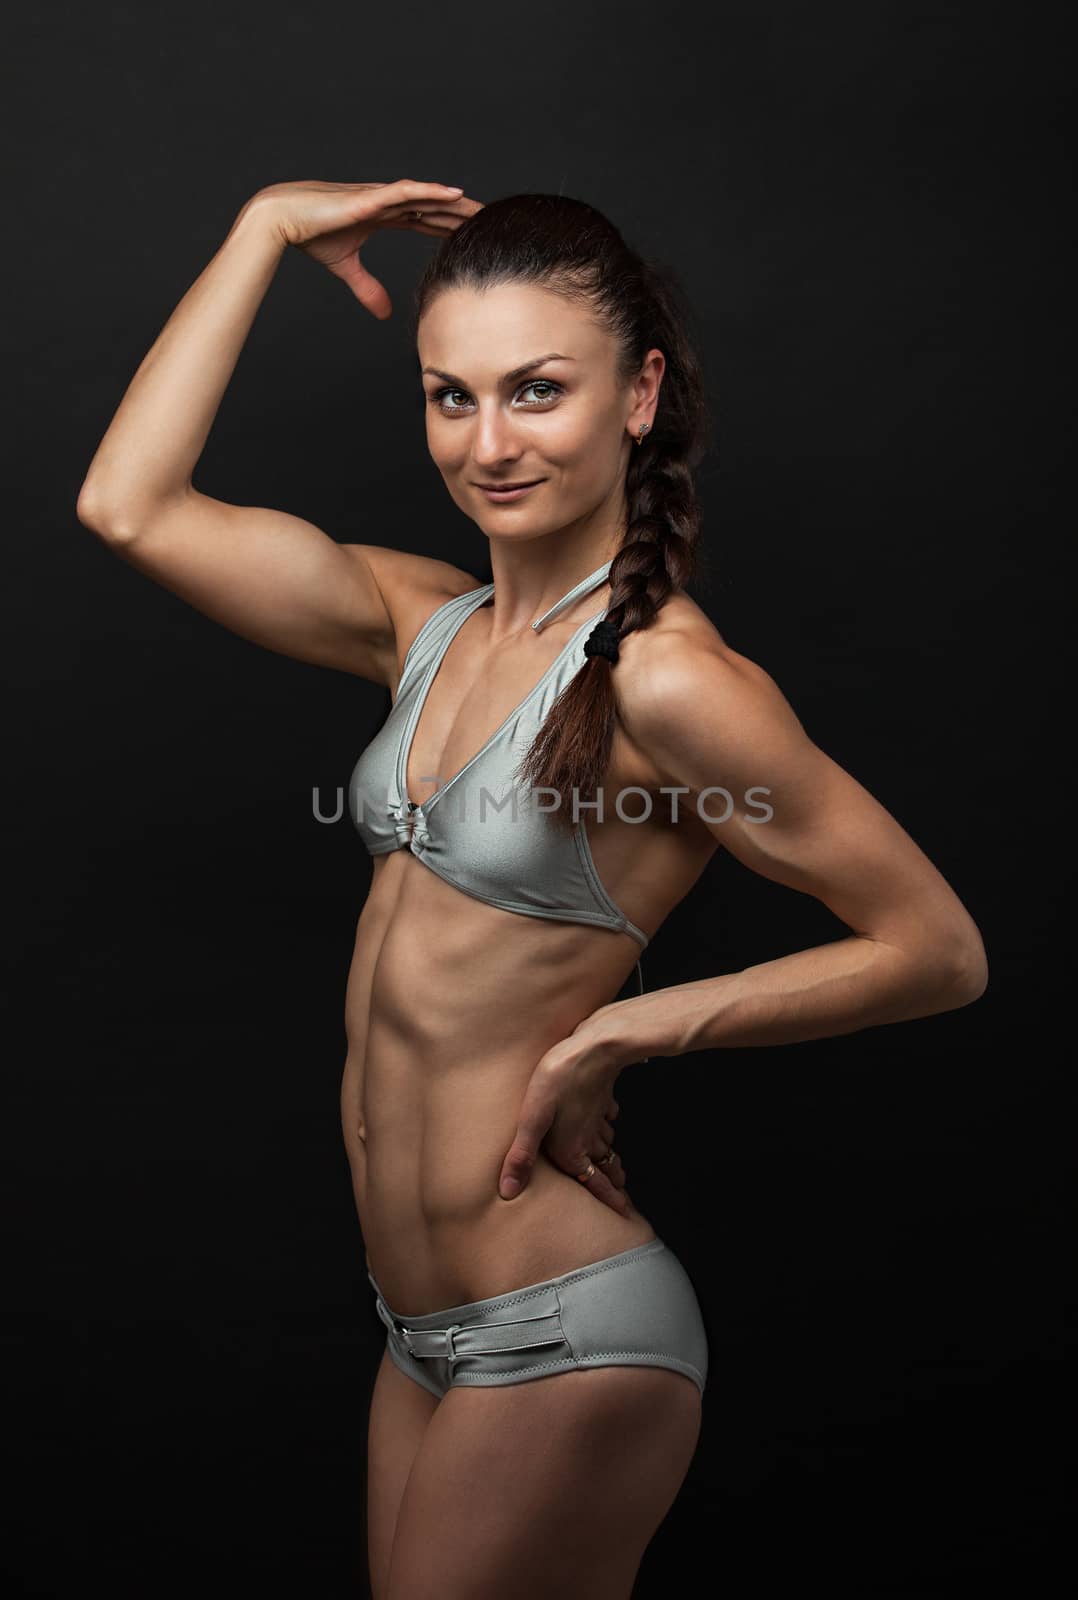 Fitness woman in bikini flexing bicep by photobac